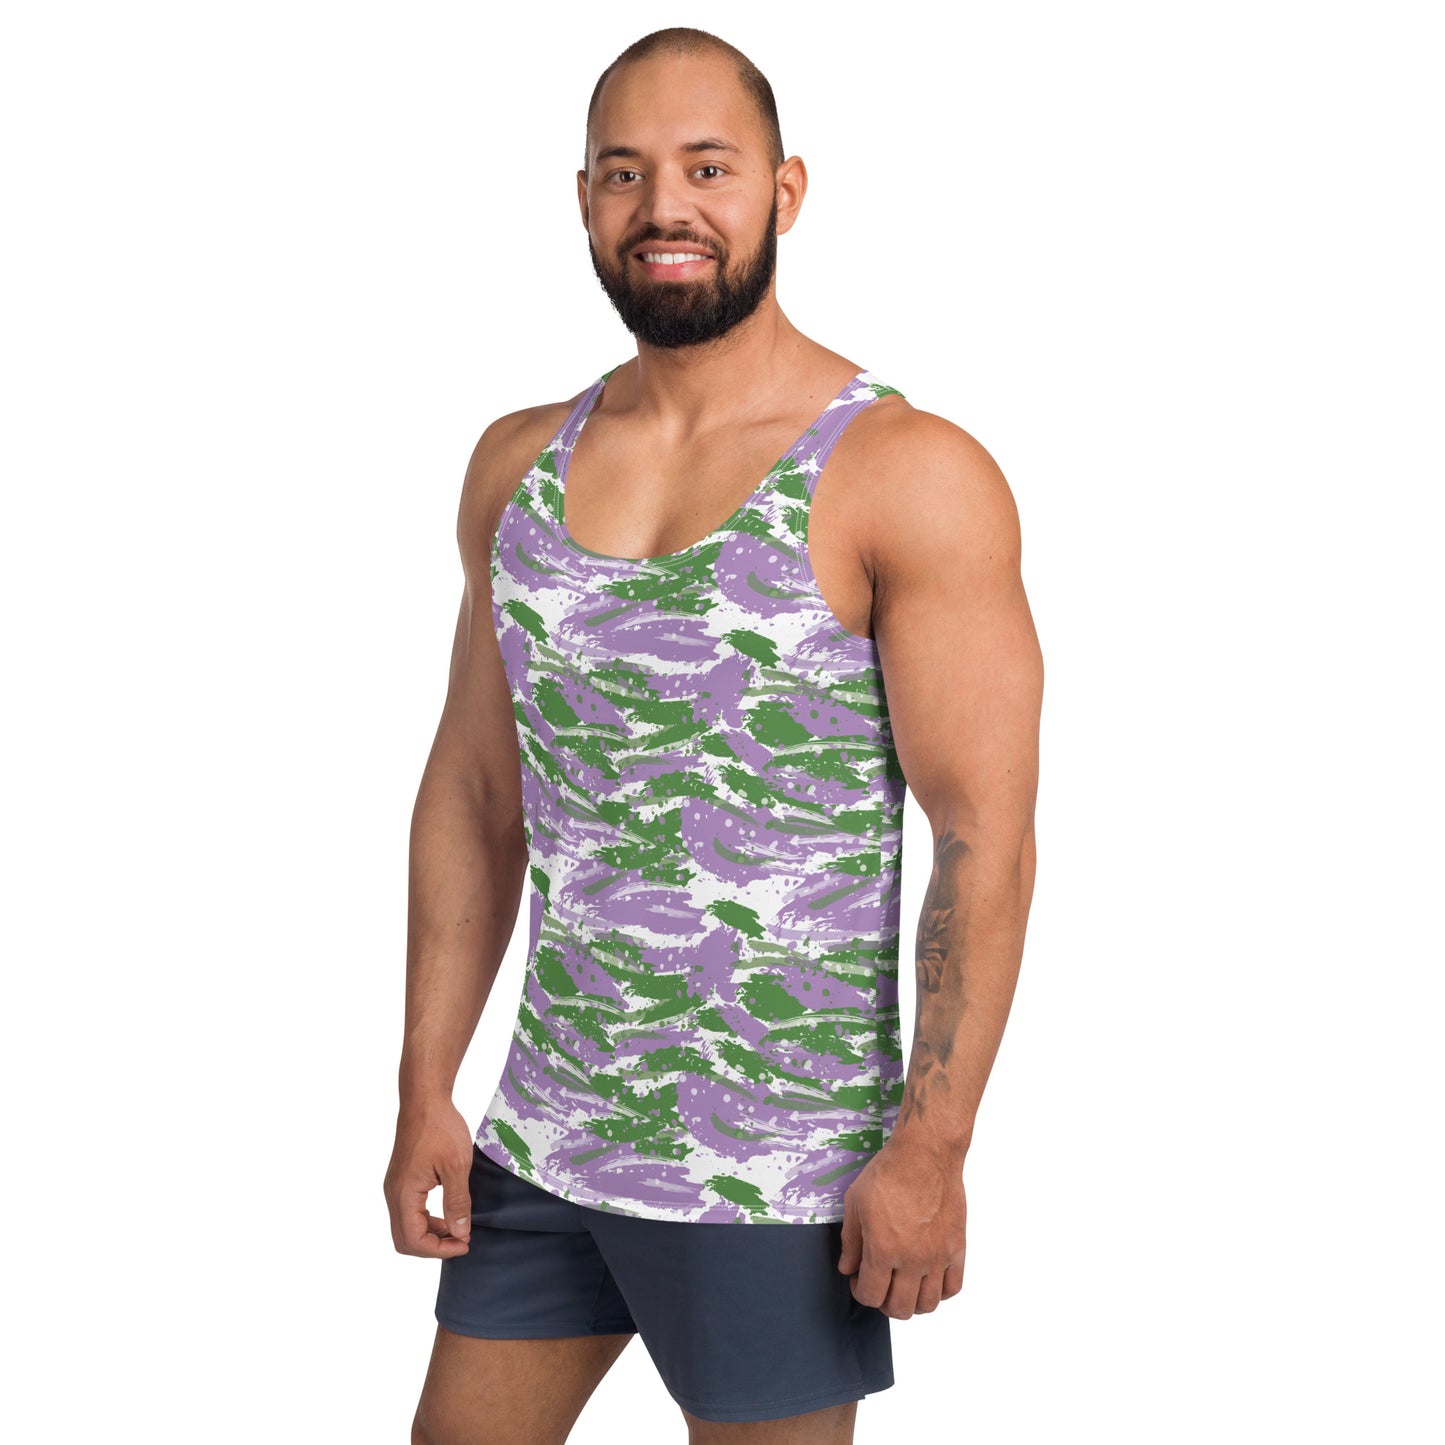 Gender Queer Pride Men's Tank Top Unisex Tank Top - LGBTQIA Purple, White, Green Flag Shirt - Parade Club Running